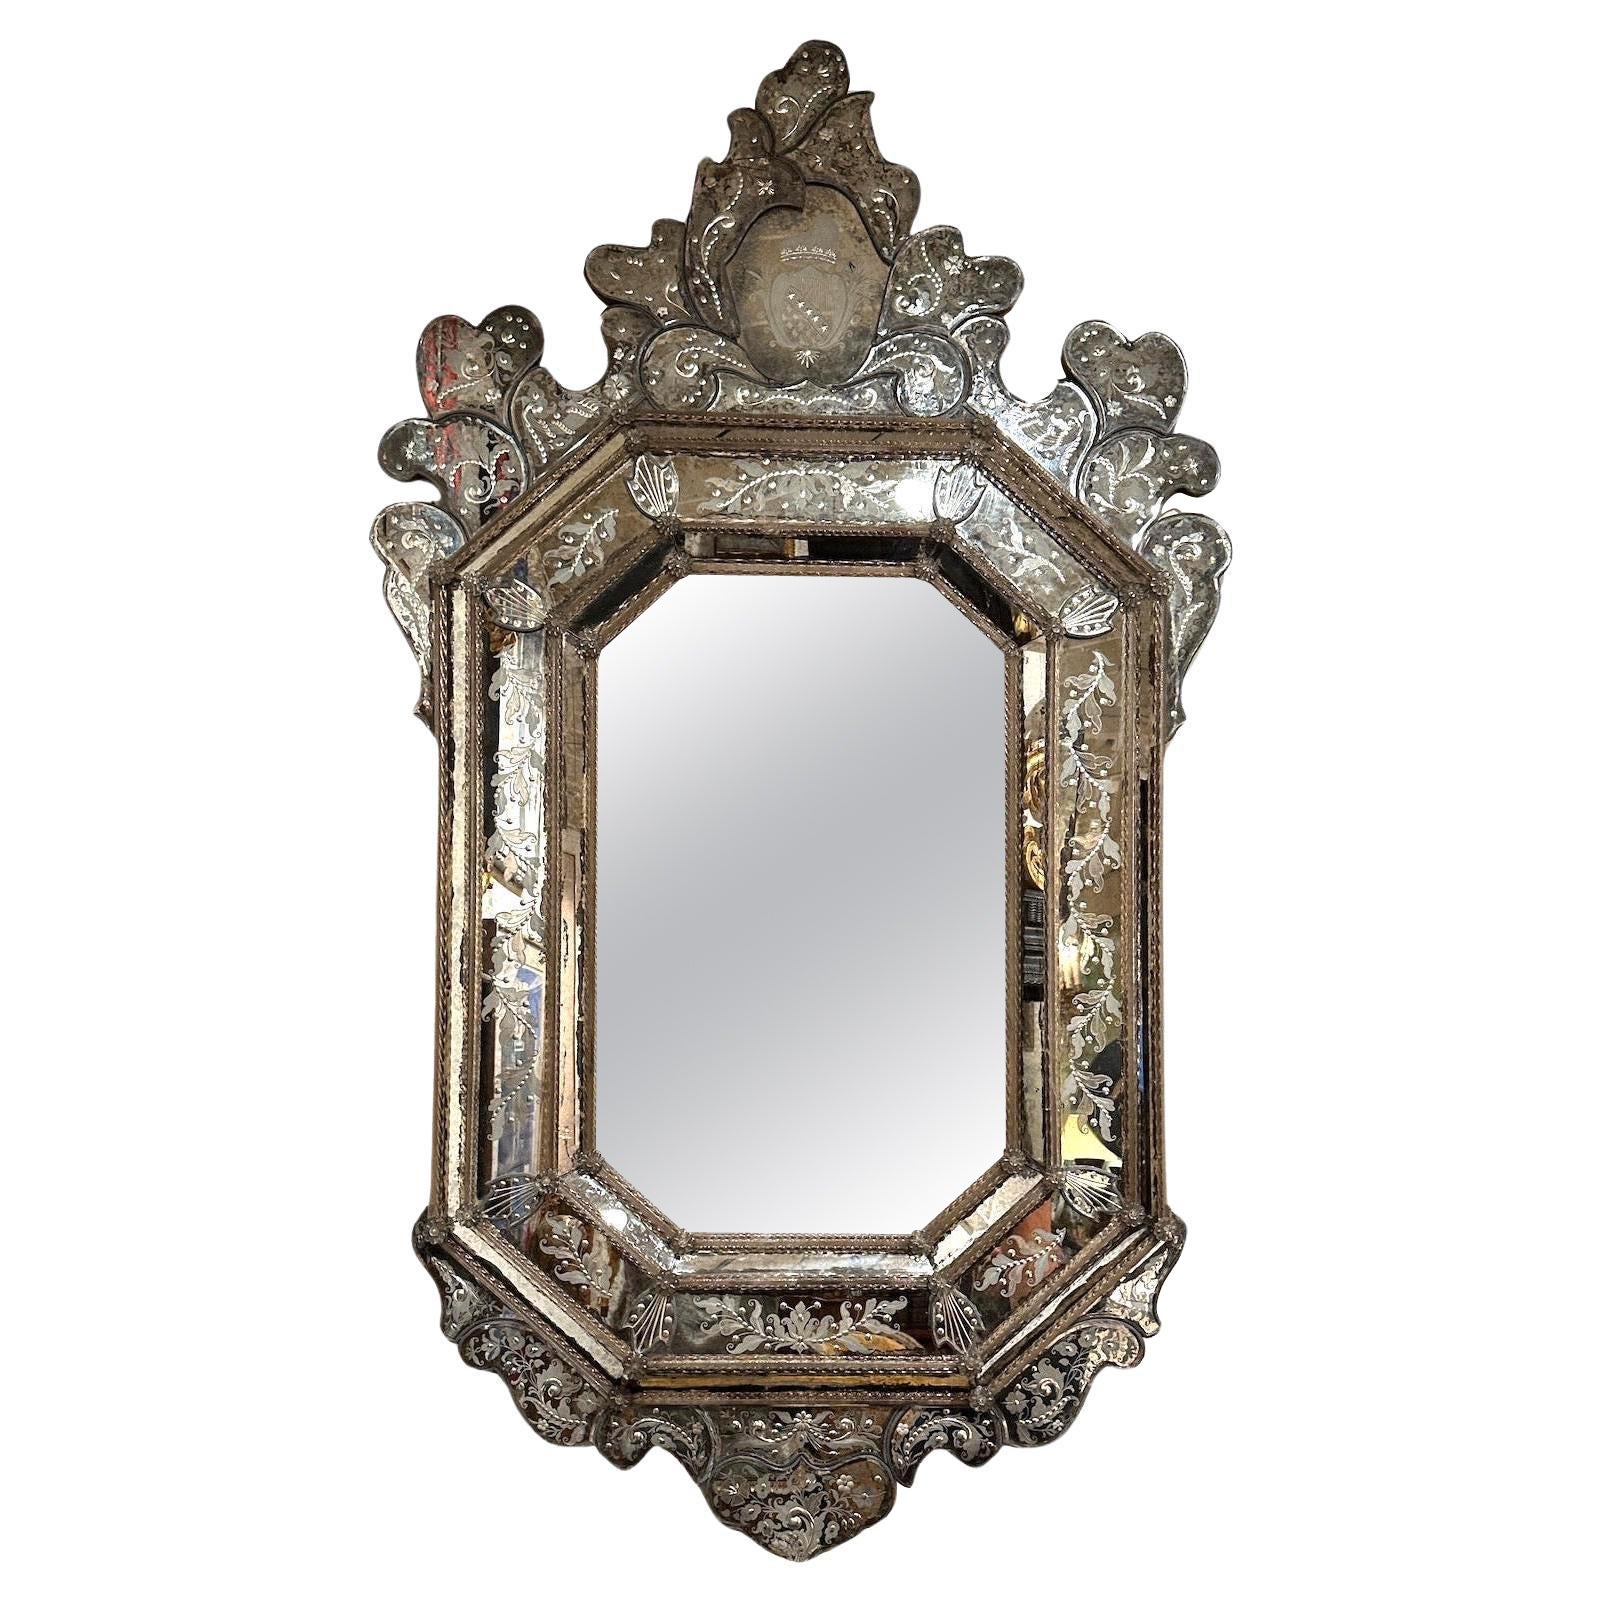 What is a Venetian mirror?